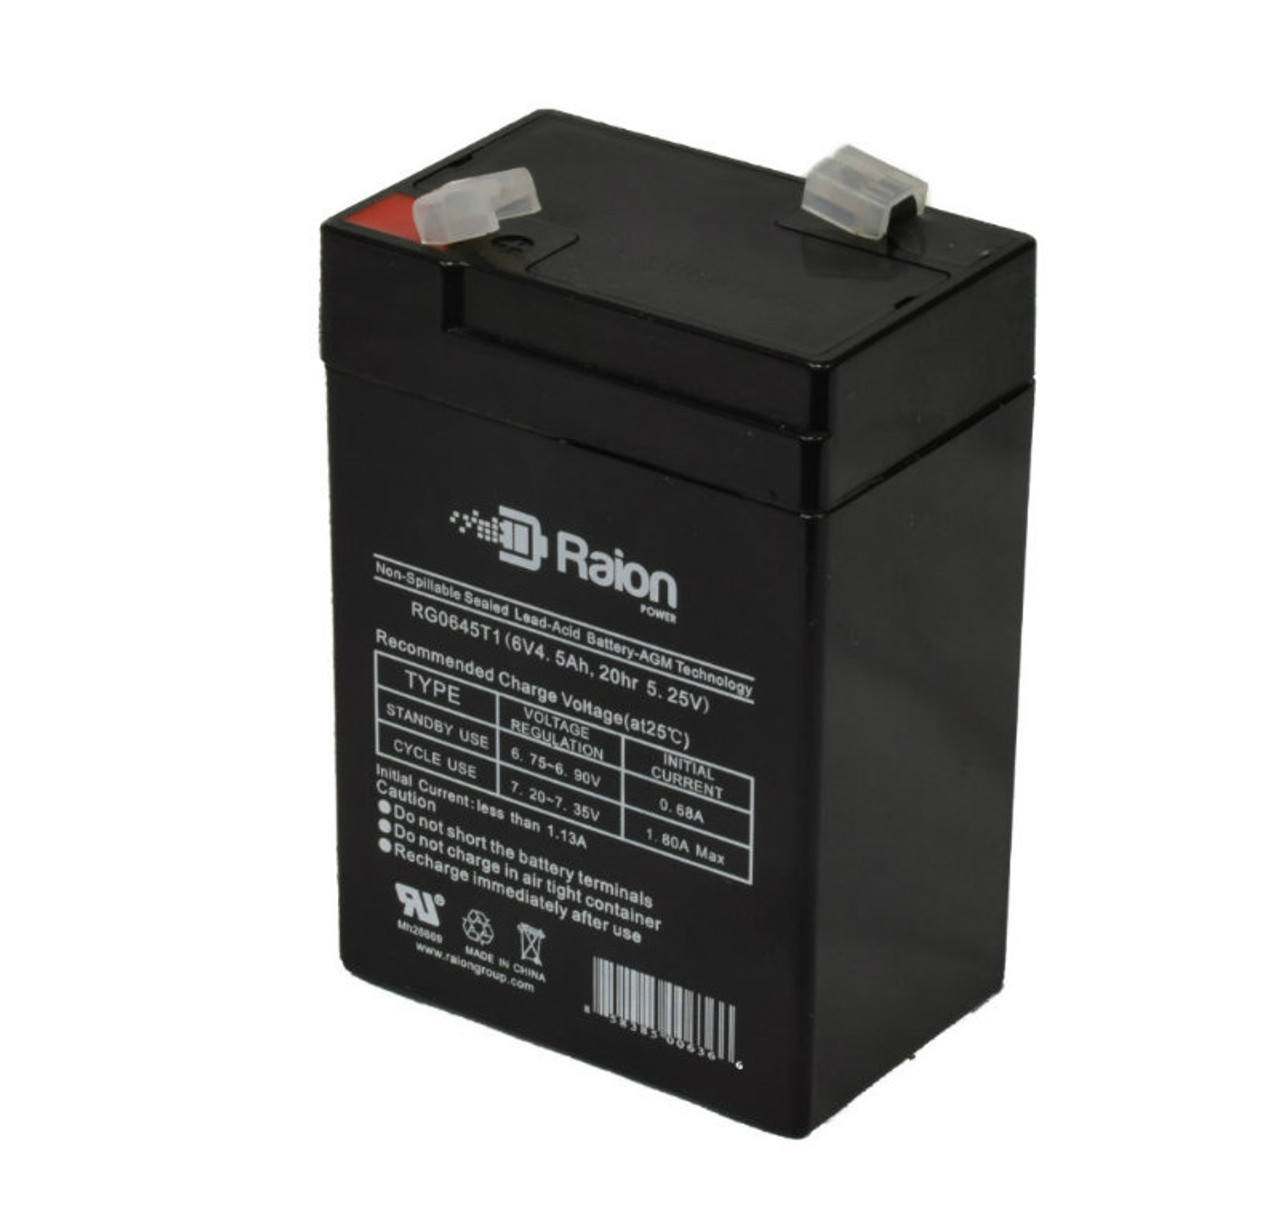 Raion Power RG0645T1 6V 4.5Ah Replacement Battery Cartridge for Peg Perego ED1006 6V Raider